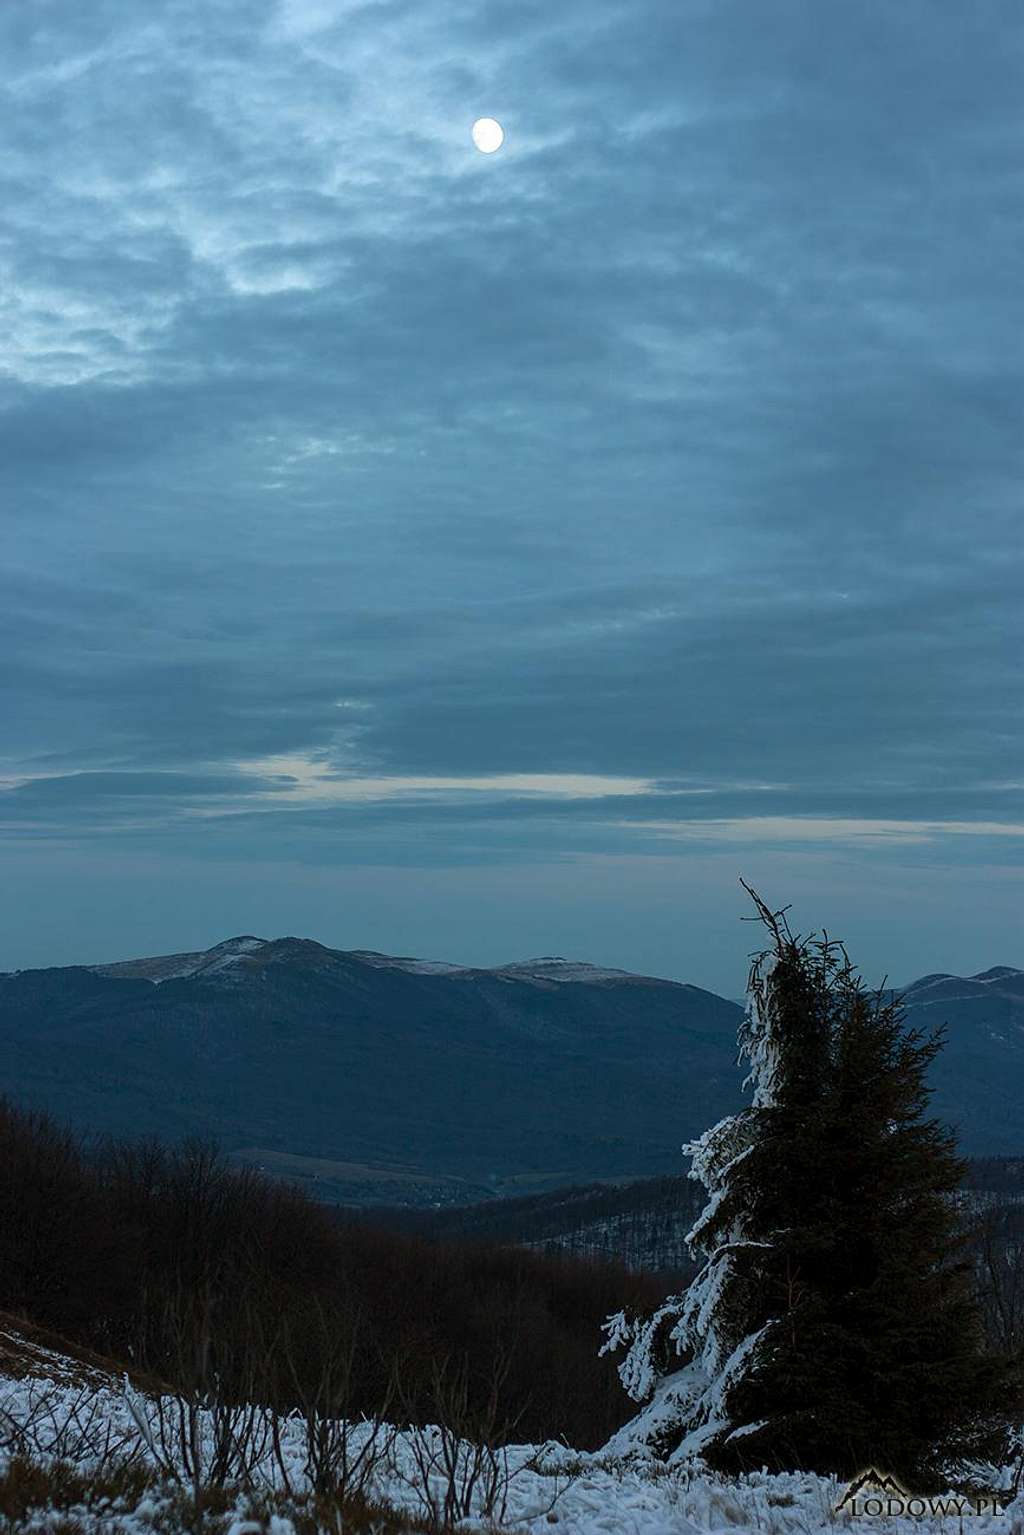 December evening in Bieszczady mountains